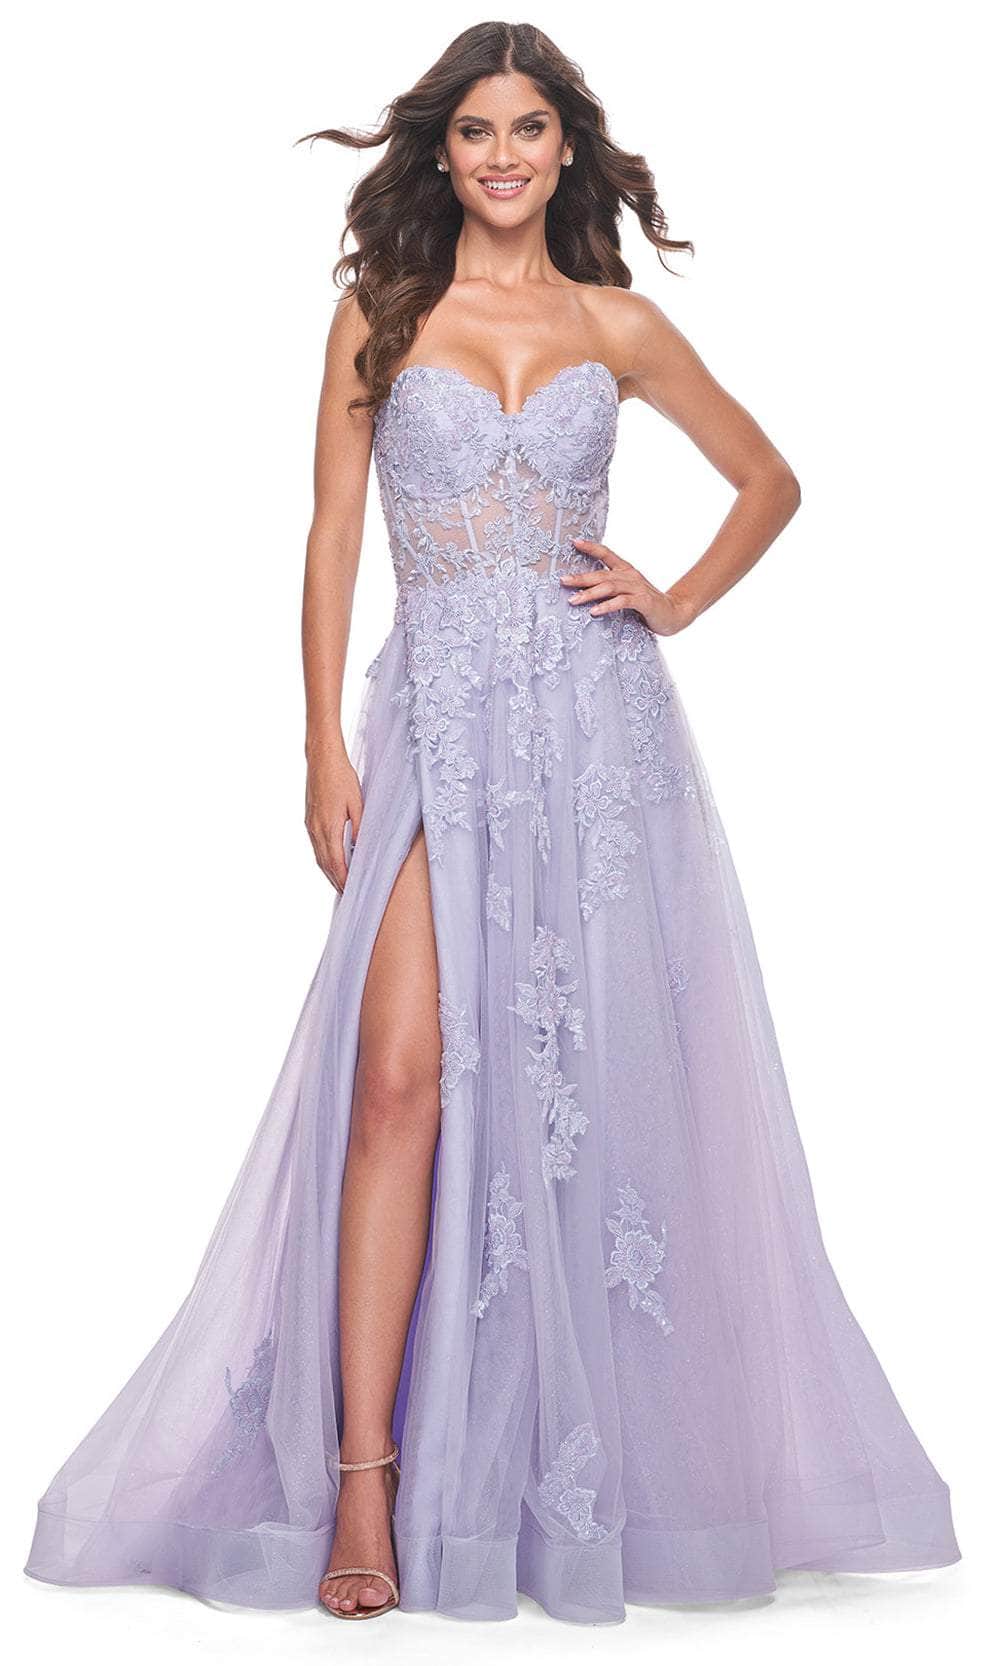 La Femme 32145 - Lace Corset Prom Dress Prom Dresses 00 / Light Periwinkle